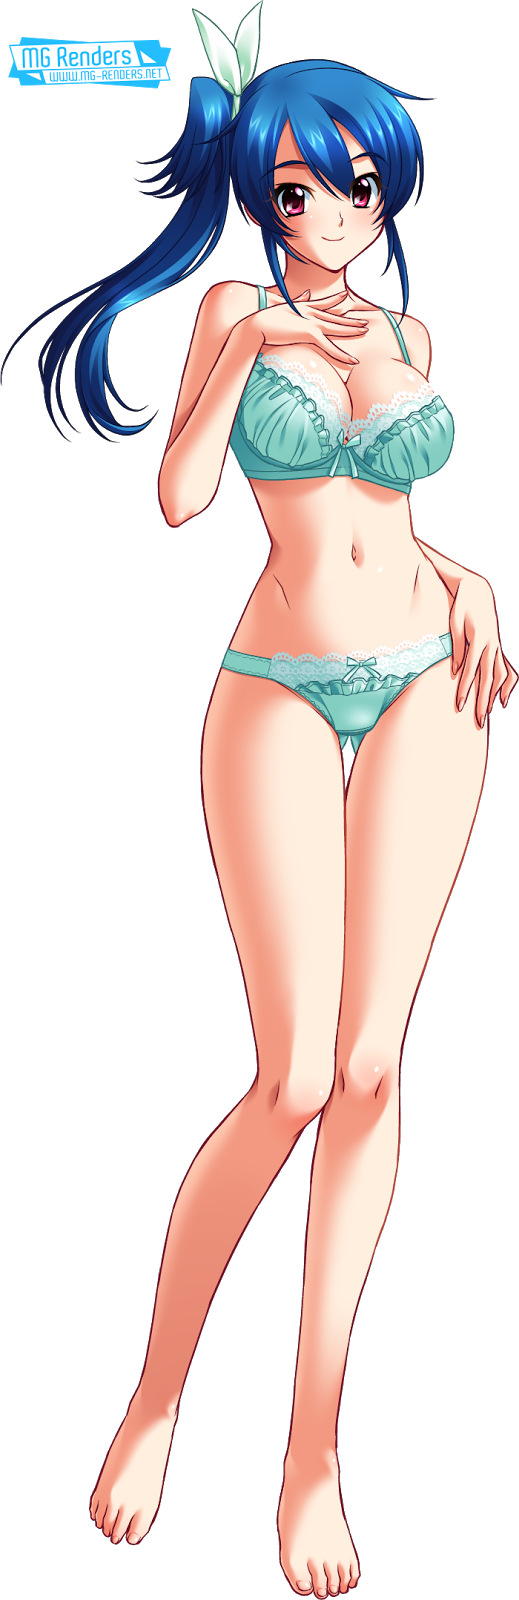 Anime Render Ecchi Transparent Background Barefoot - Barefoot Anime Girl Render (519x1600)